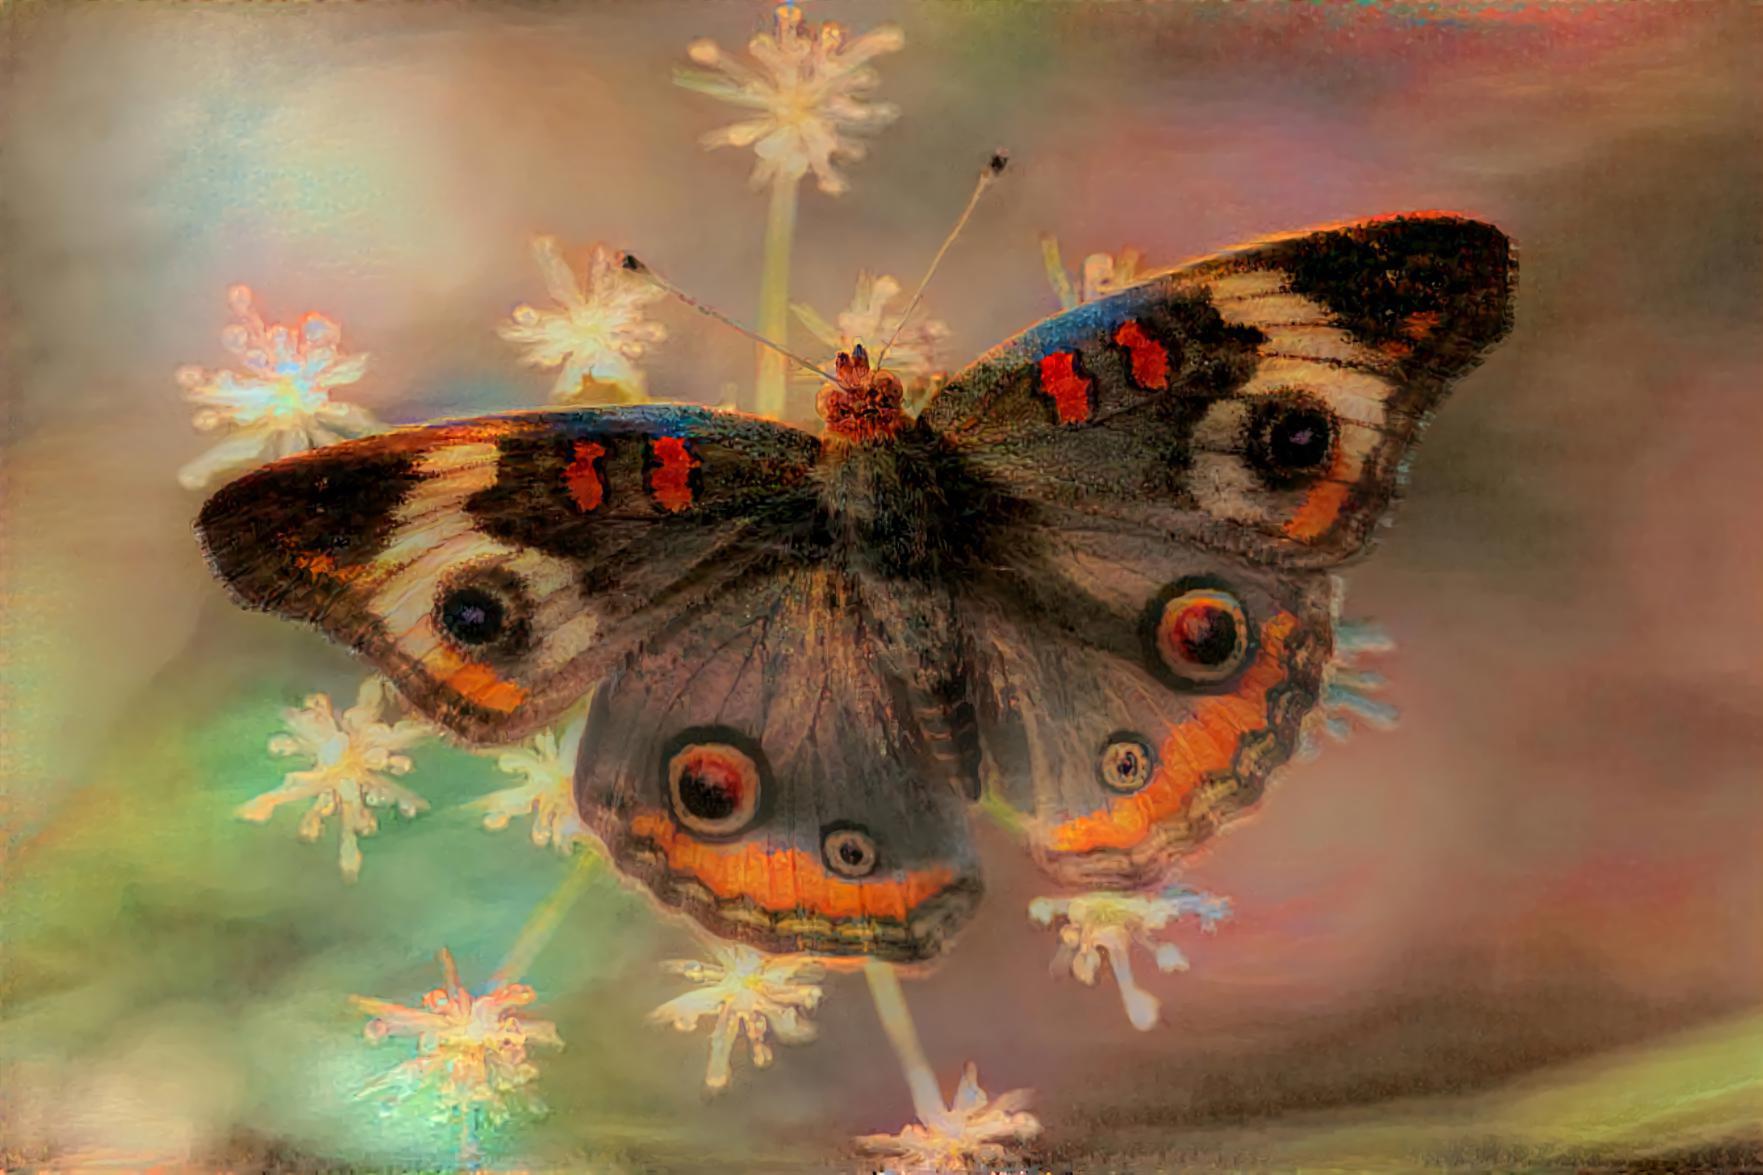 Bermuda Buckeye Butterfly (Junonia coenia).  Original image by Shawn Kenessey on Unsplash.